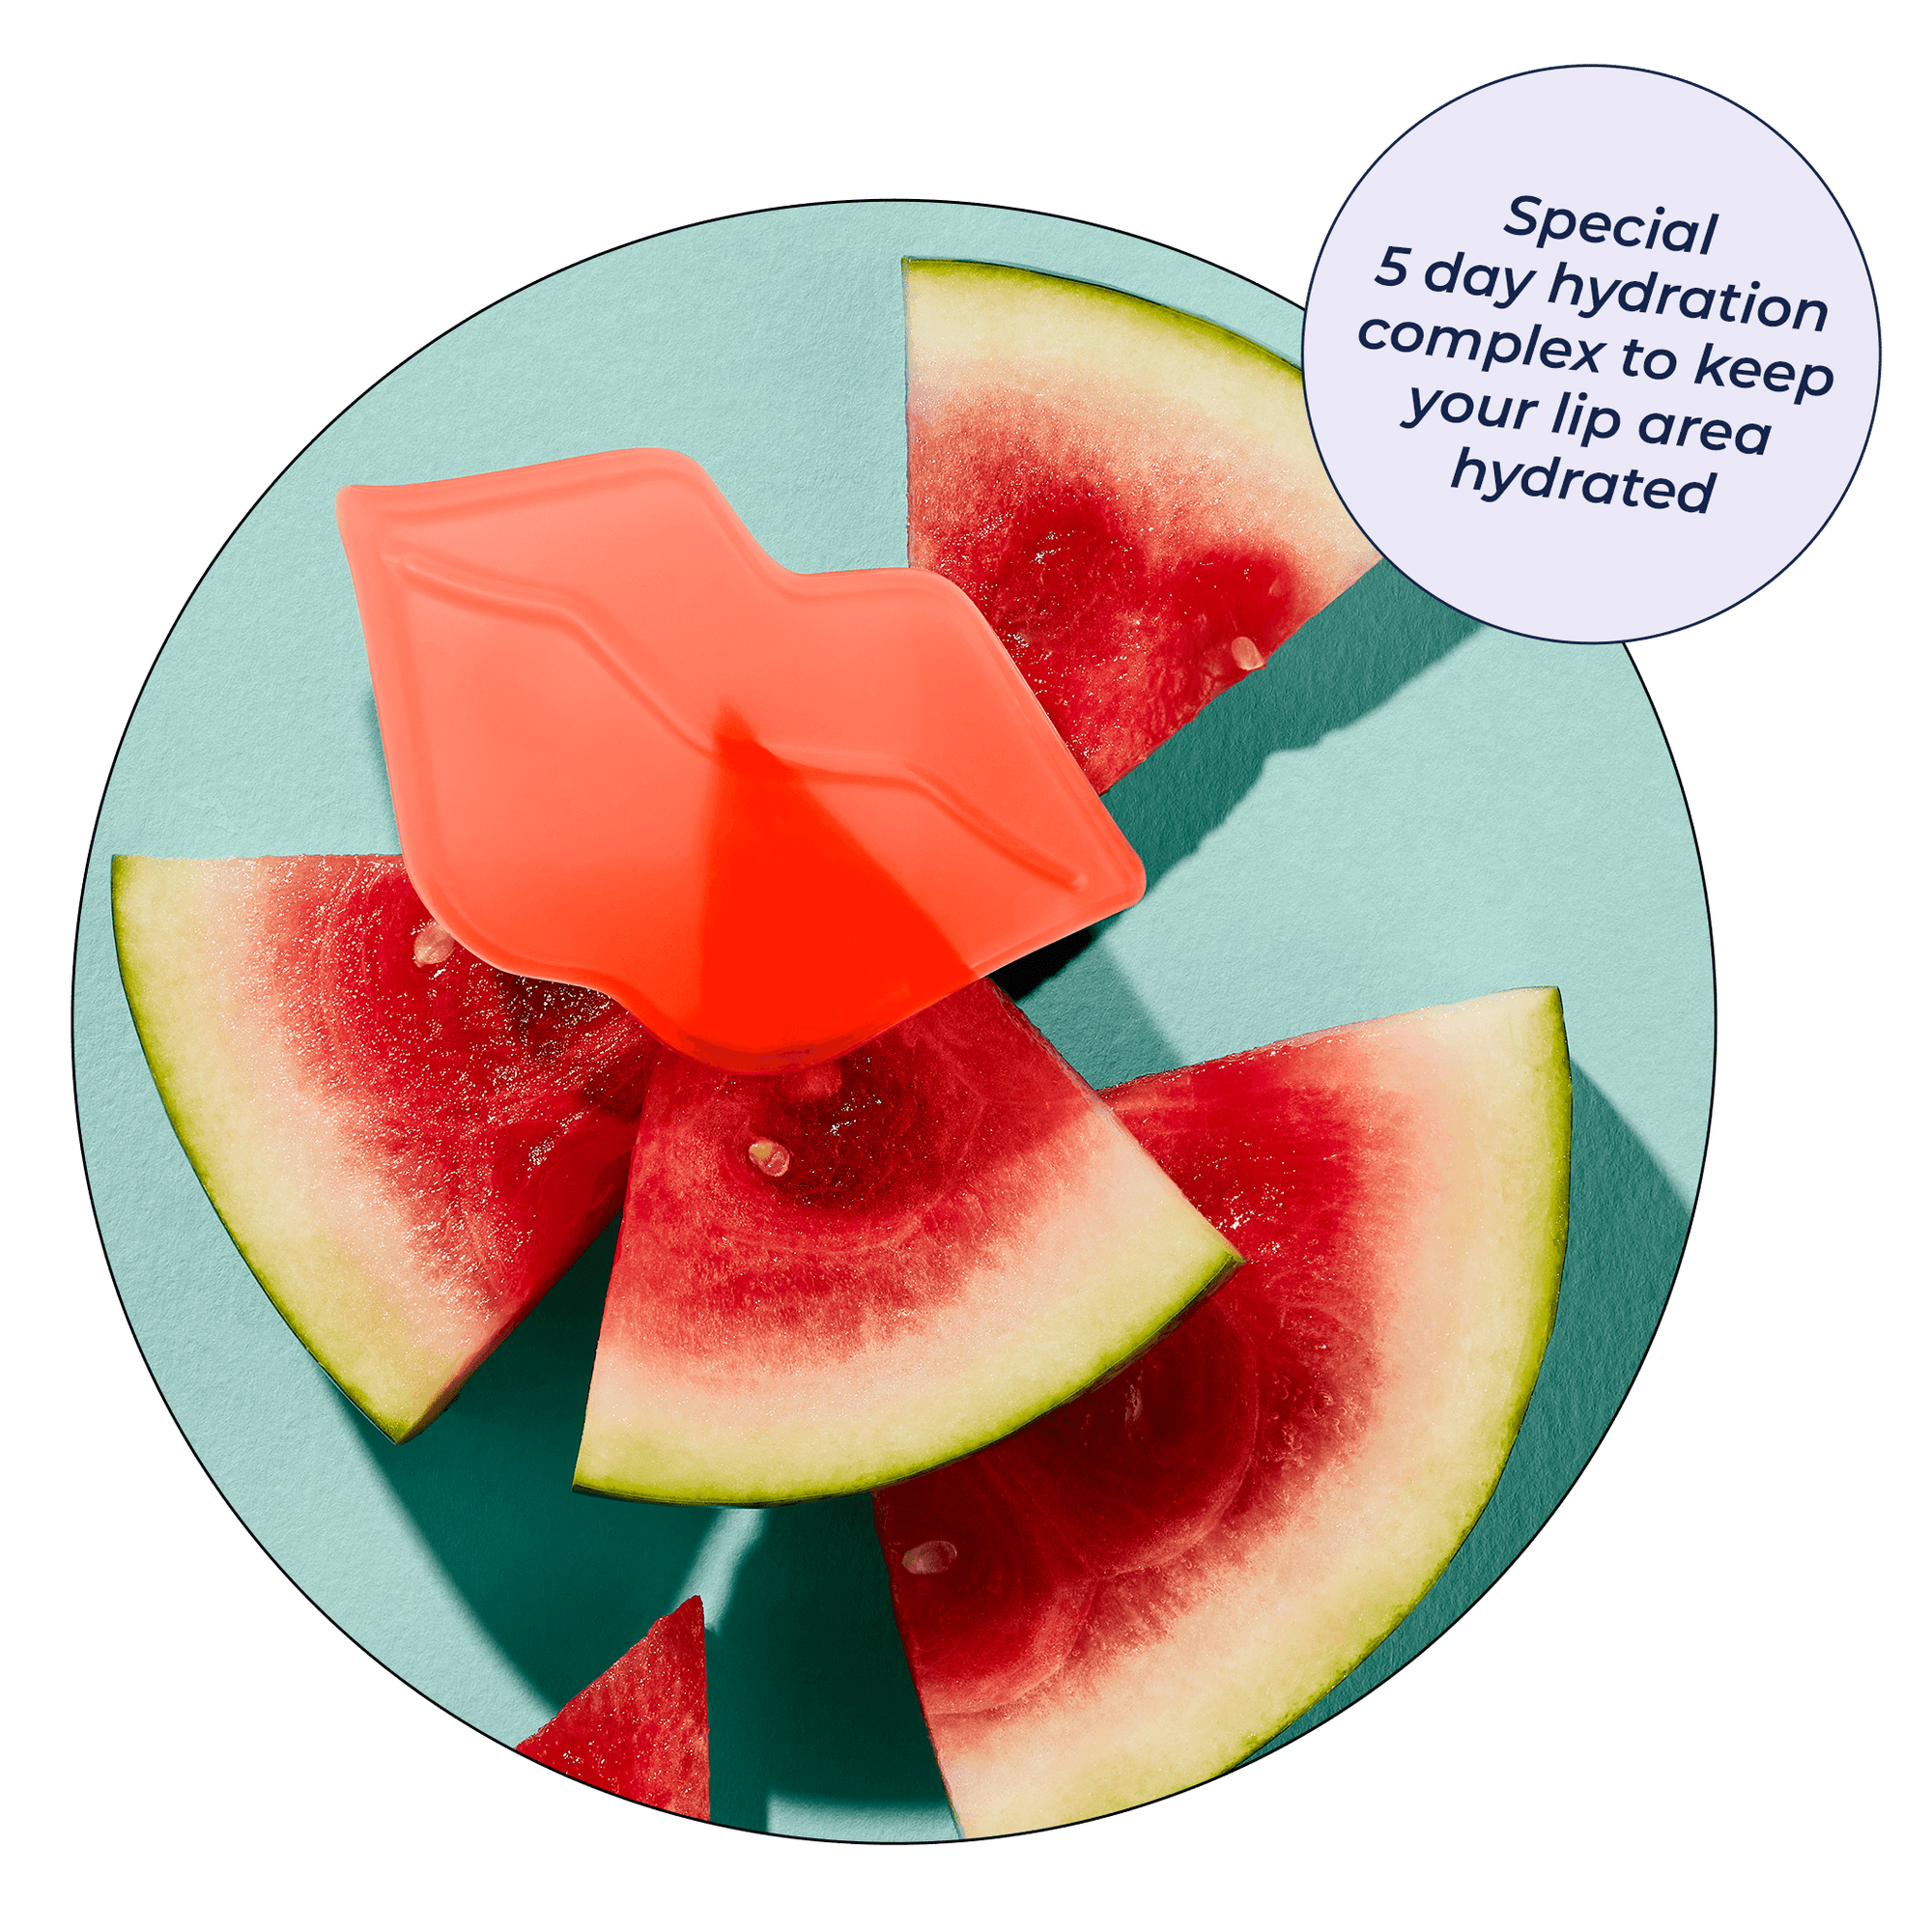 Collagen Watermelon Hydrogel Lip Mask - Vitamasques